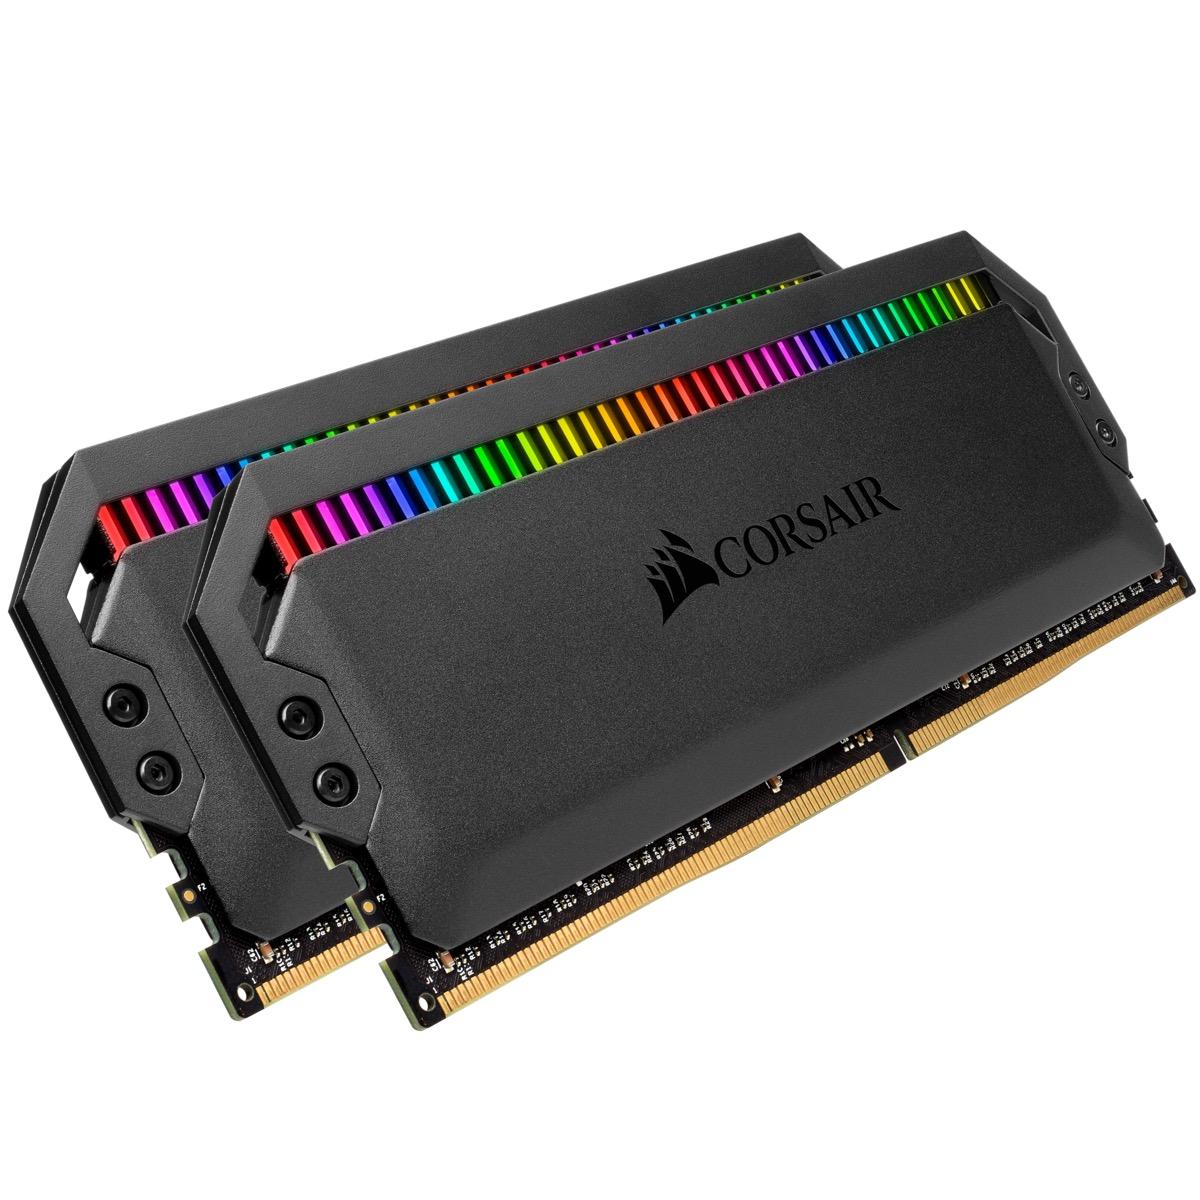 Памет Corsair Dominator Platinum RGB Black 16GB(2x8GB) DDR4 PC4-25600 3200MHz CL16 CMT16GX4M2Z3200C16 AMD Ryzen Optimized-3